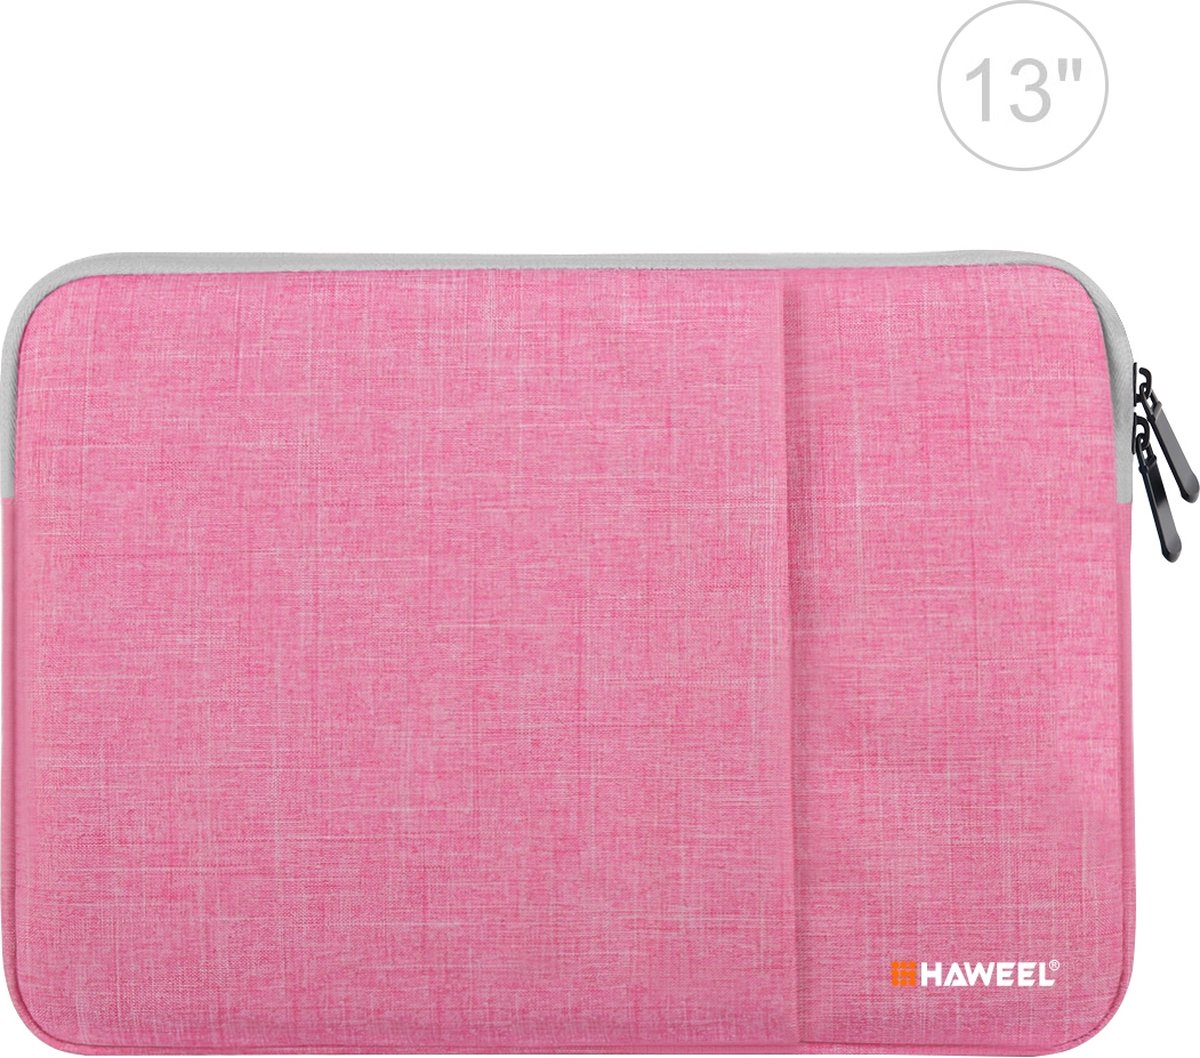 Let op type!! HAWEEL 13 inch Laptoptas Sleeve voor MacBook Samsung Lenovo Sony Dell Chuwi Asus HP (roze)